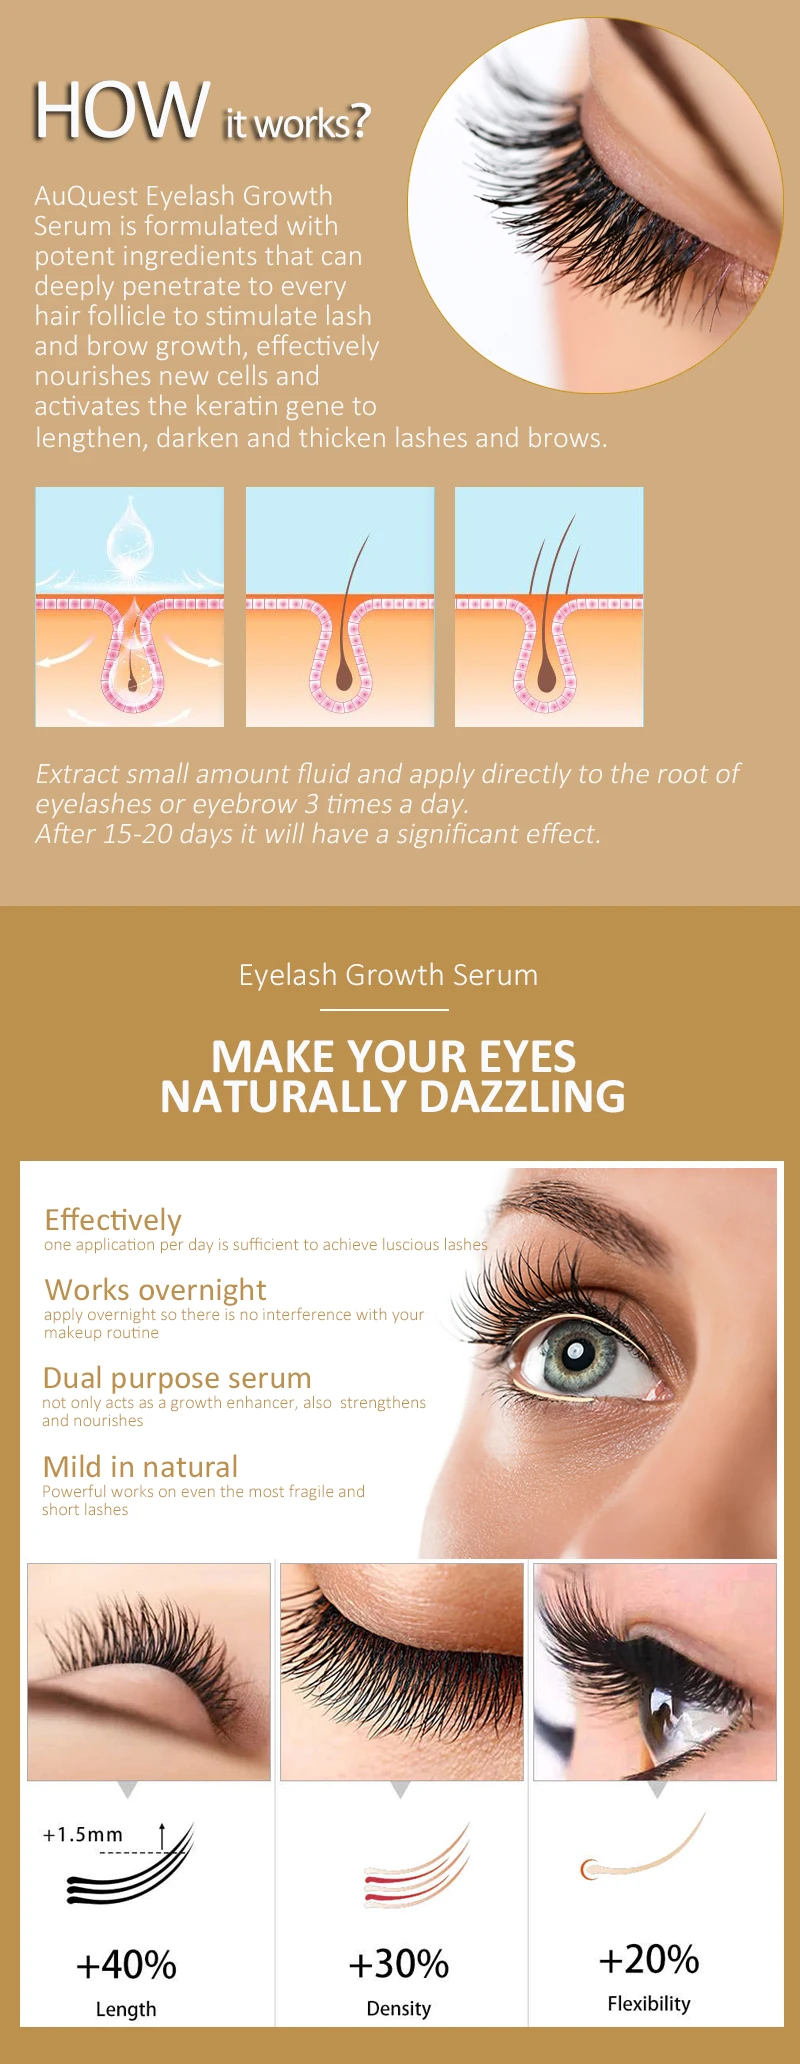 AuQuest All Natural Eyelash Growth Serum